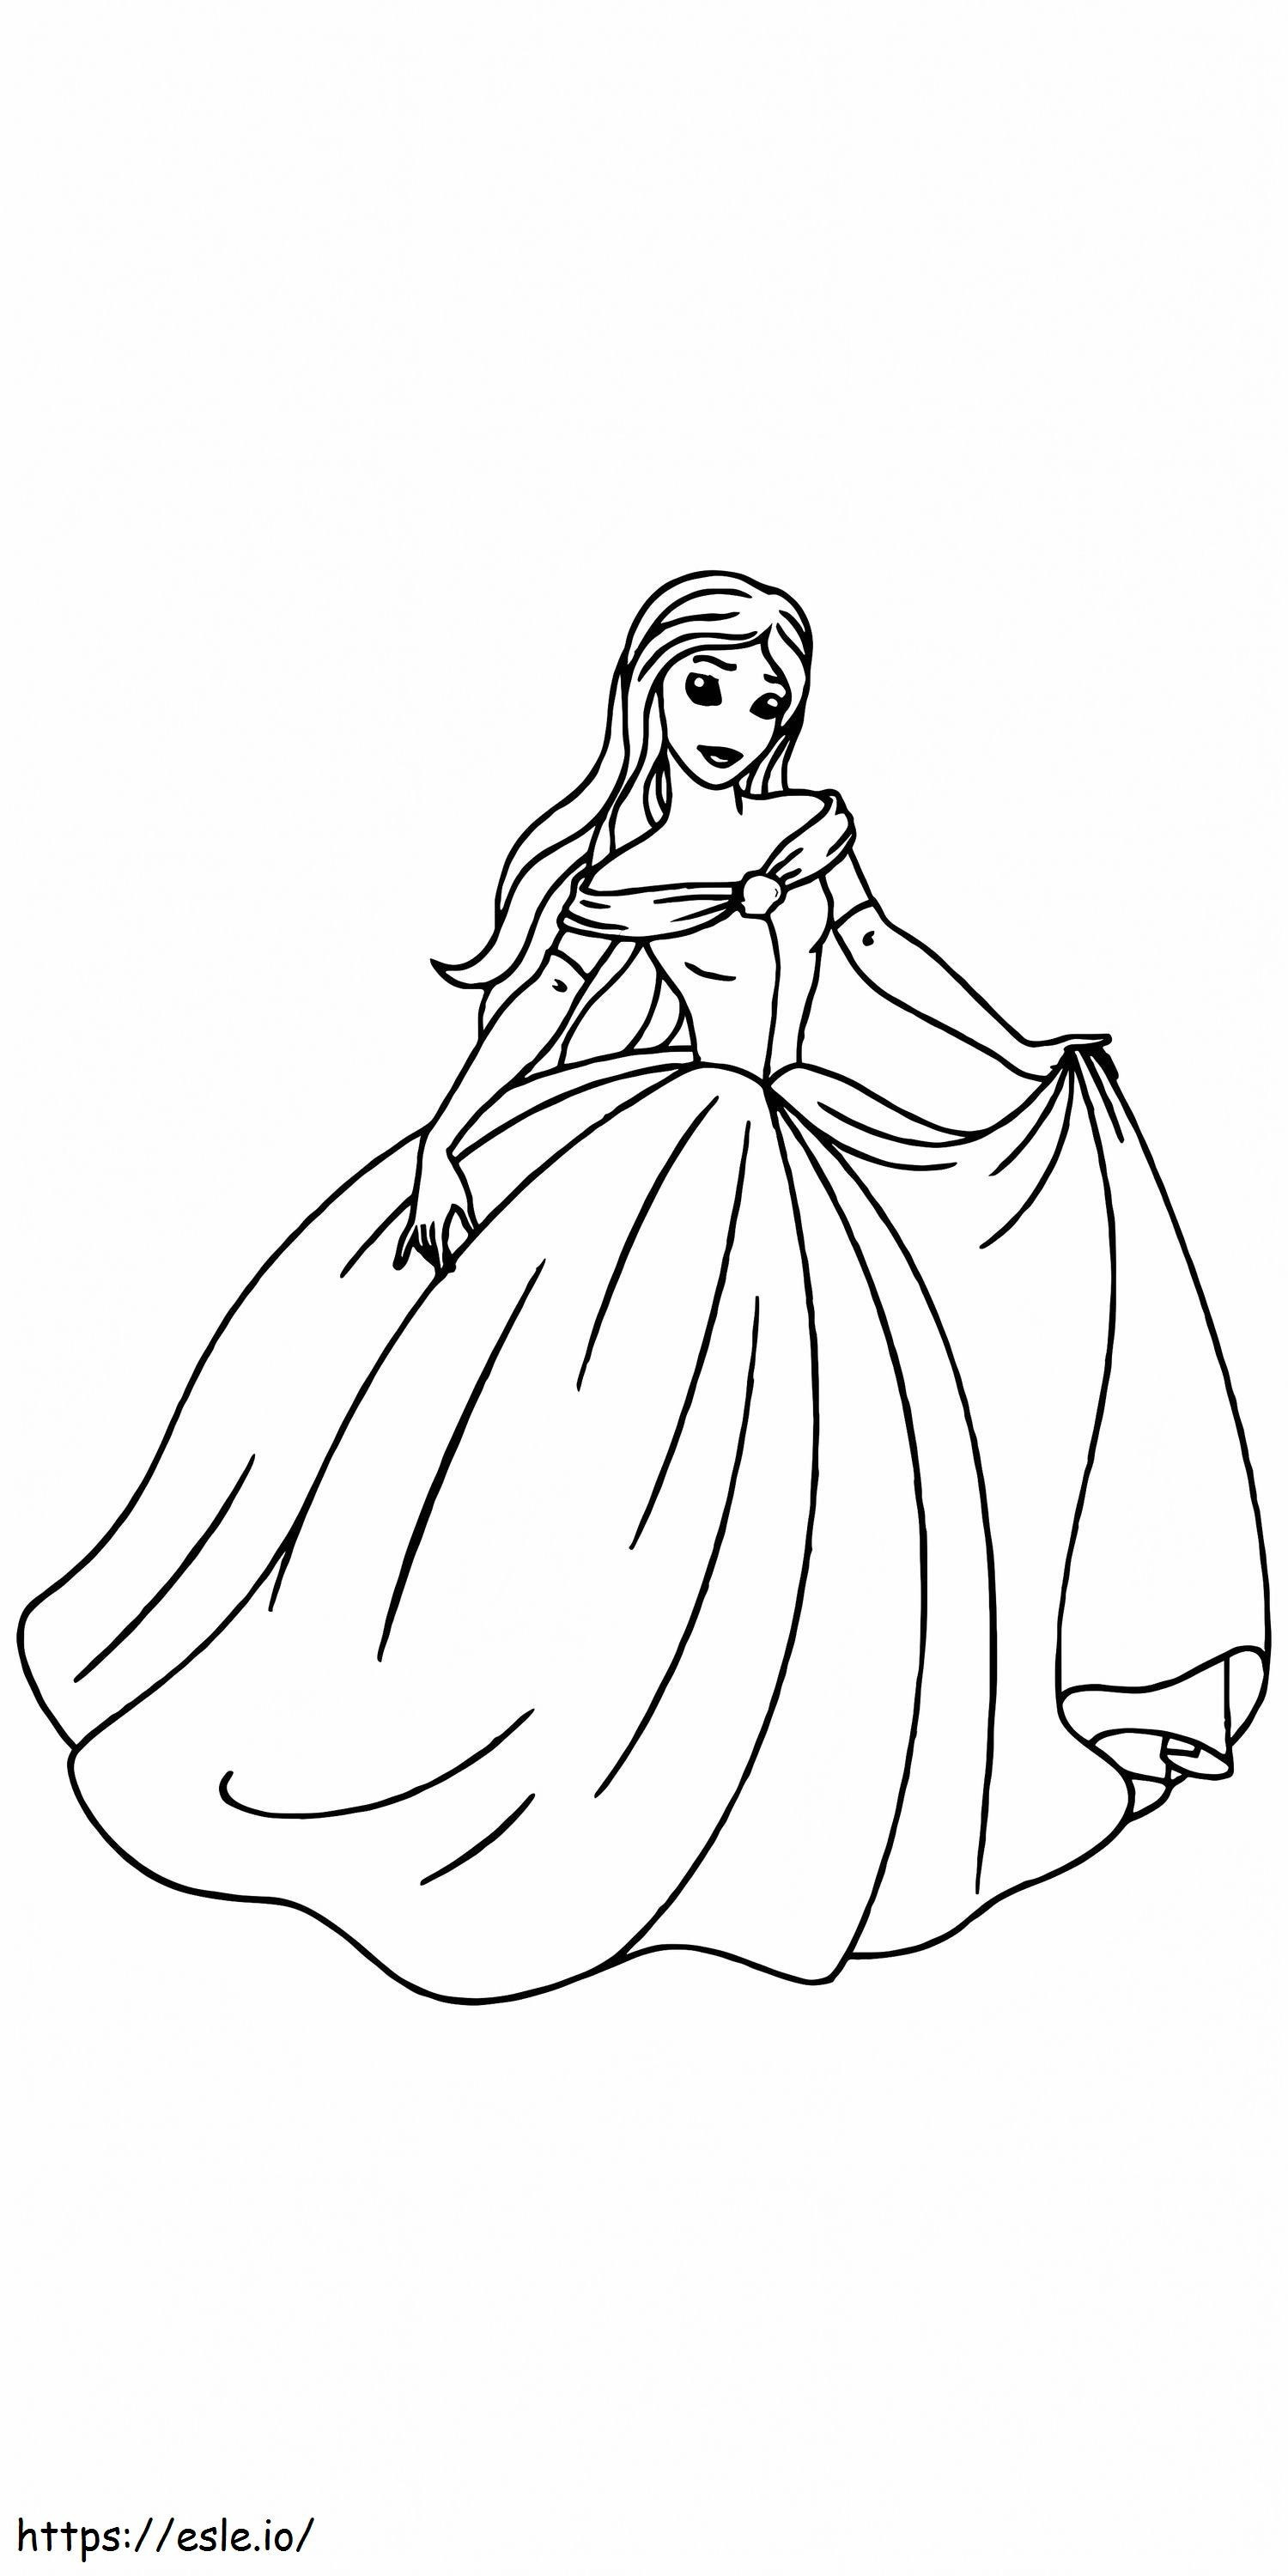 Princess And The Pea Printable 12 coloring page